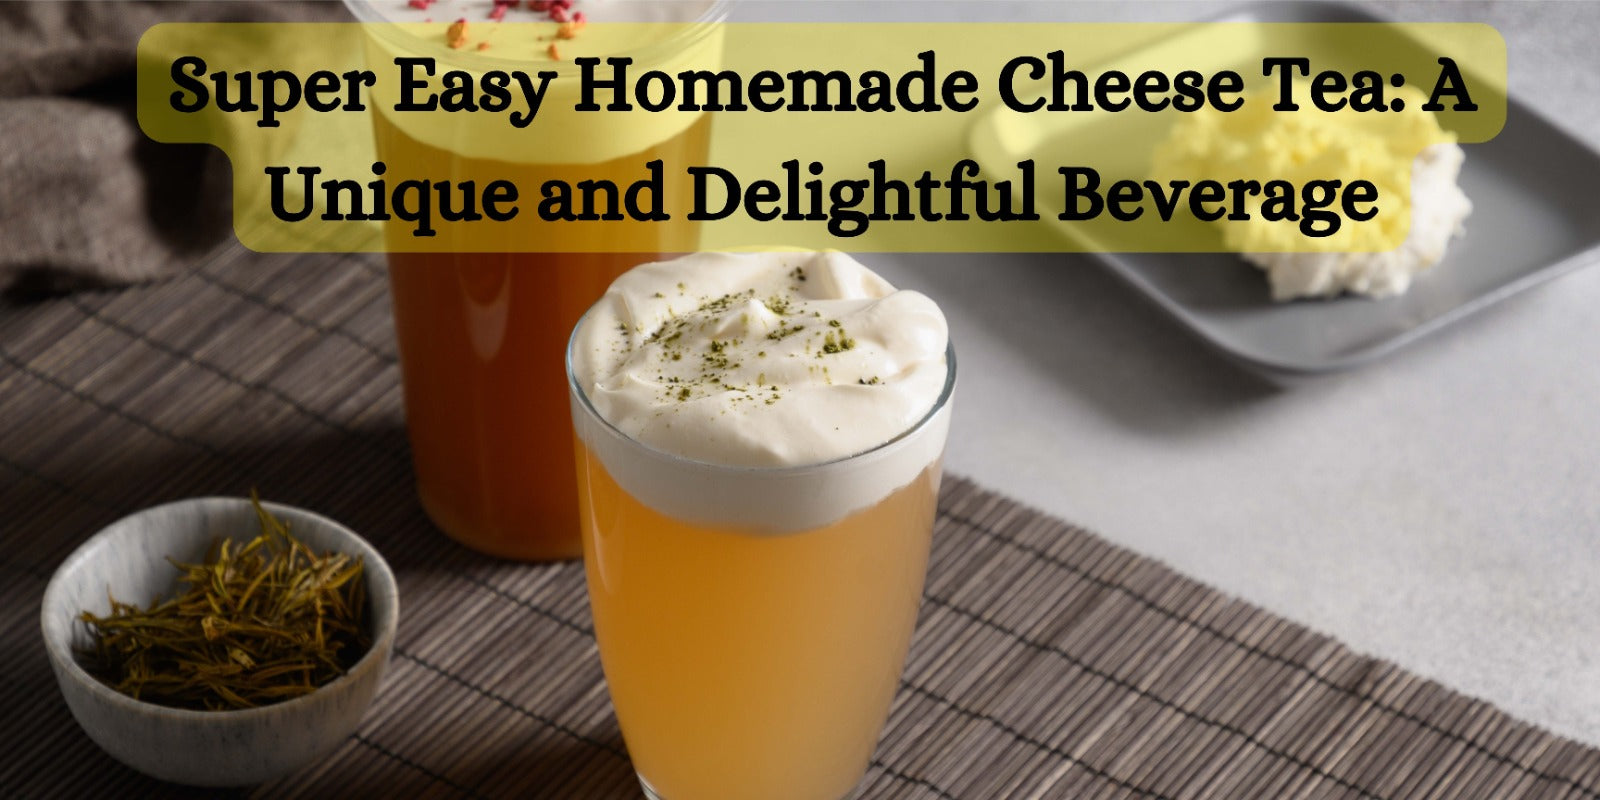 Super Easy Homemade Cheese Tea: A Unique and Delightful Beverage